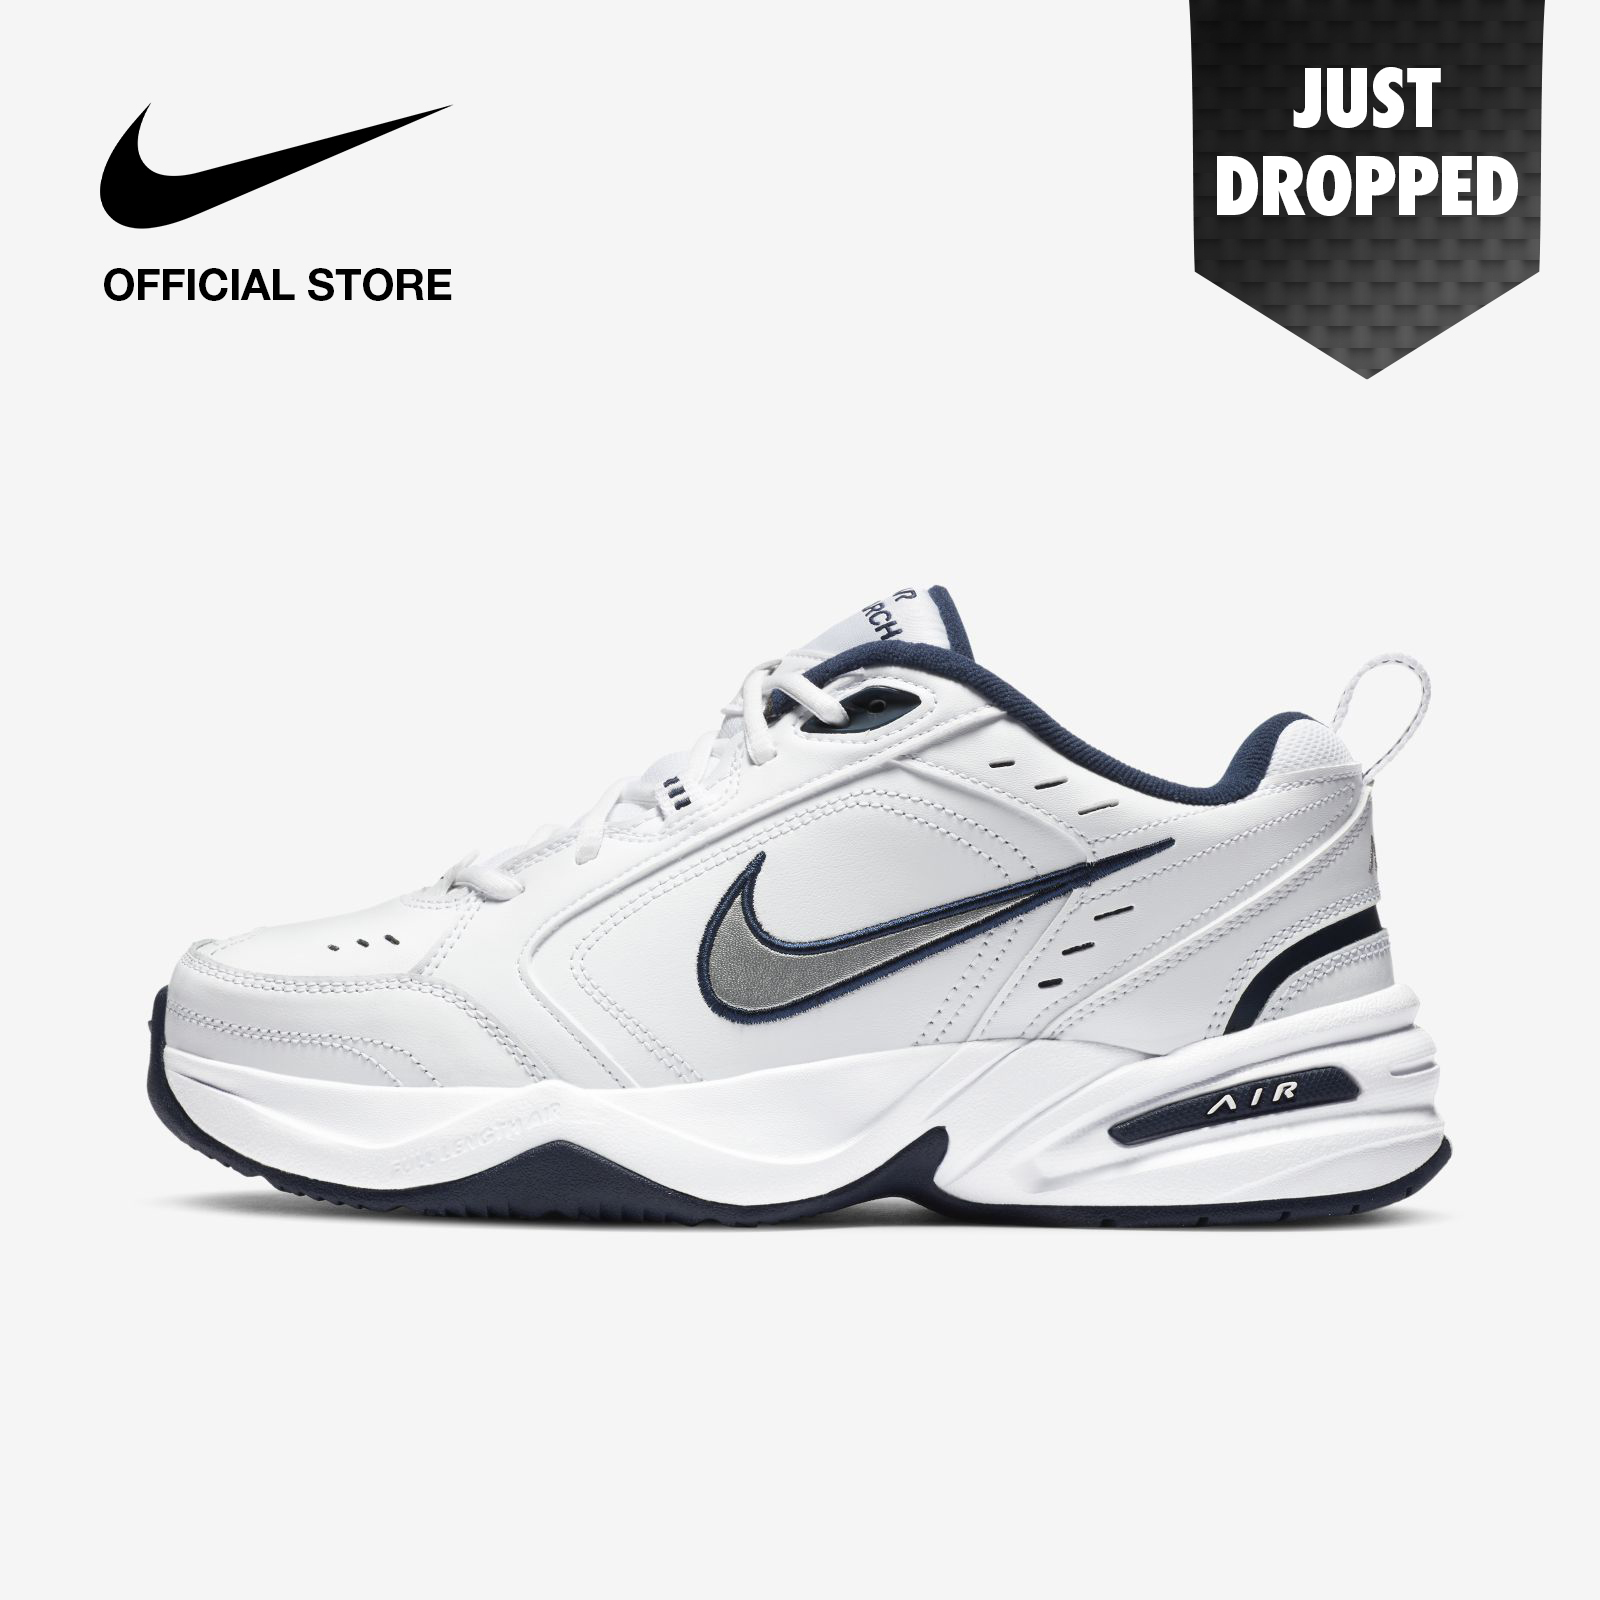 Nike Men's Air Monarch IV Training Shoes - White ไนกี้ รองเท้าเทรนนิ่งผู้ชาย แอร์ โมนาร์ช IV - สีขาว